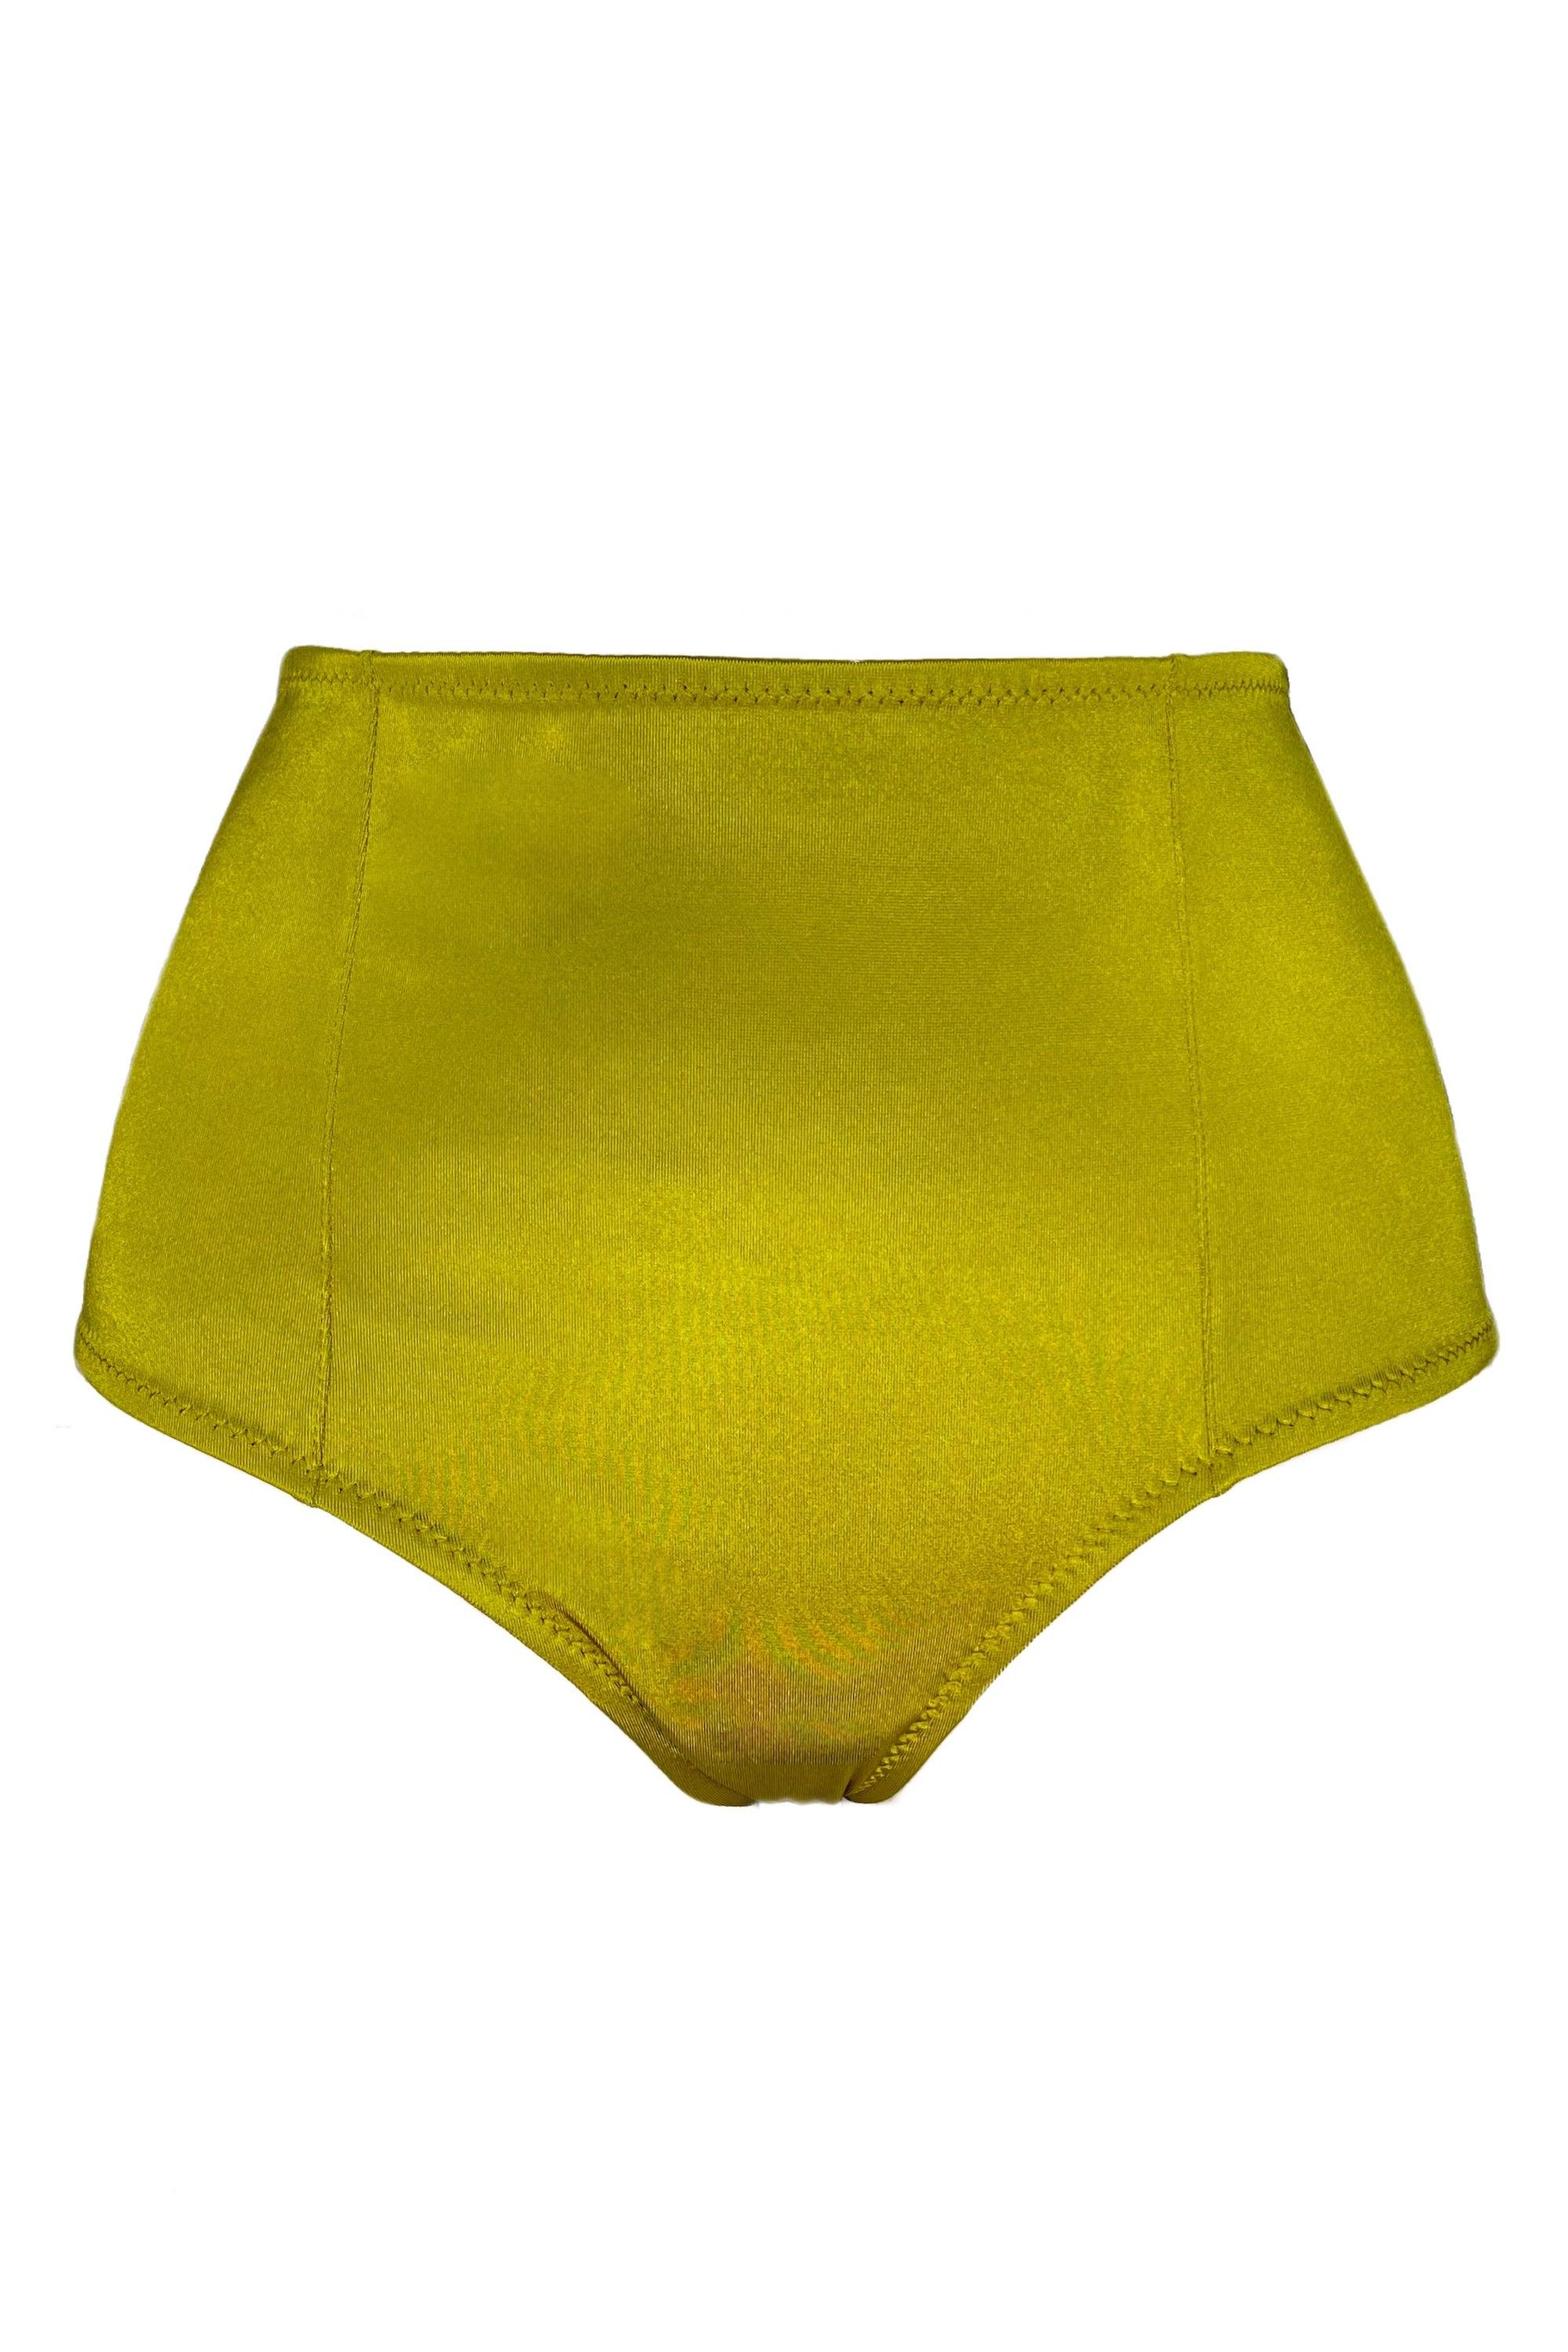 Joli Gloss Green Fuchsia High Waisted Panties Yesundress